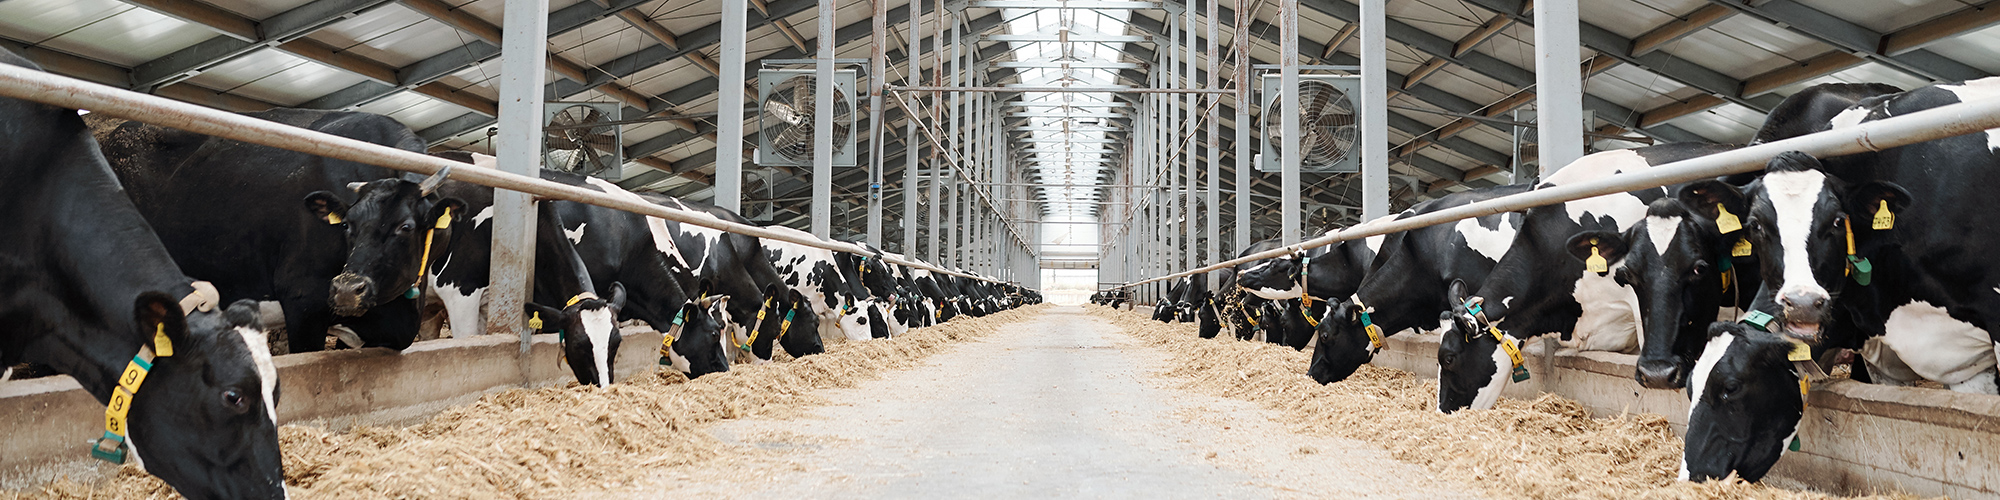 cows eating in dairy barn